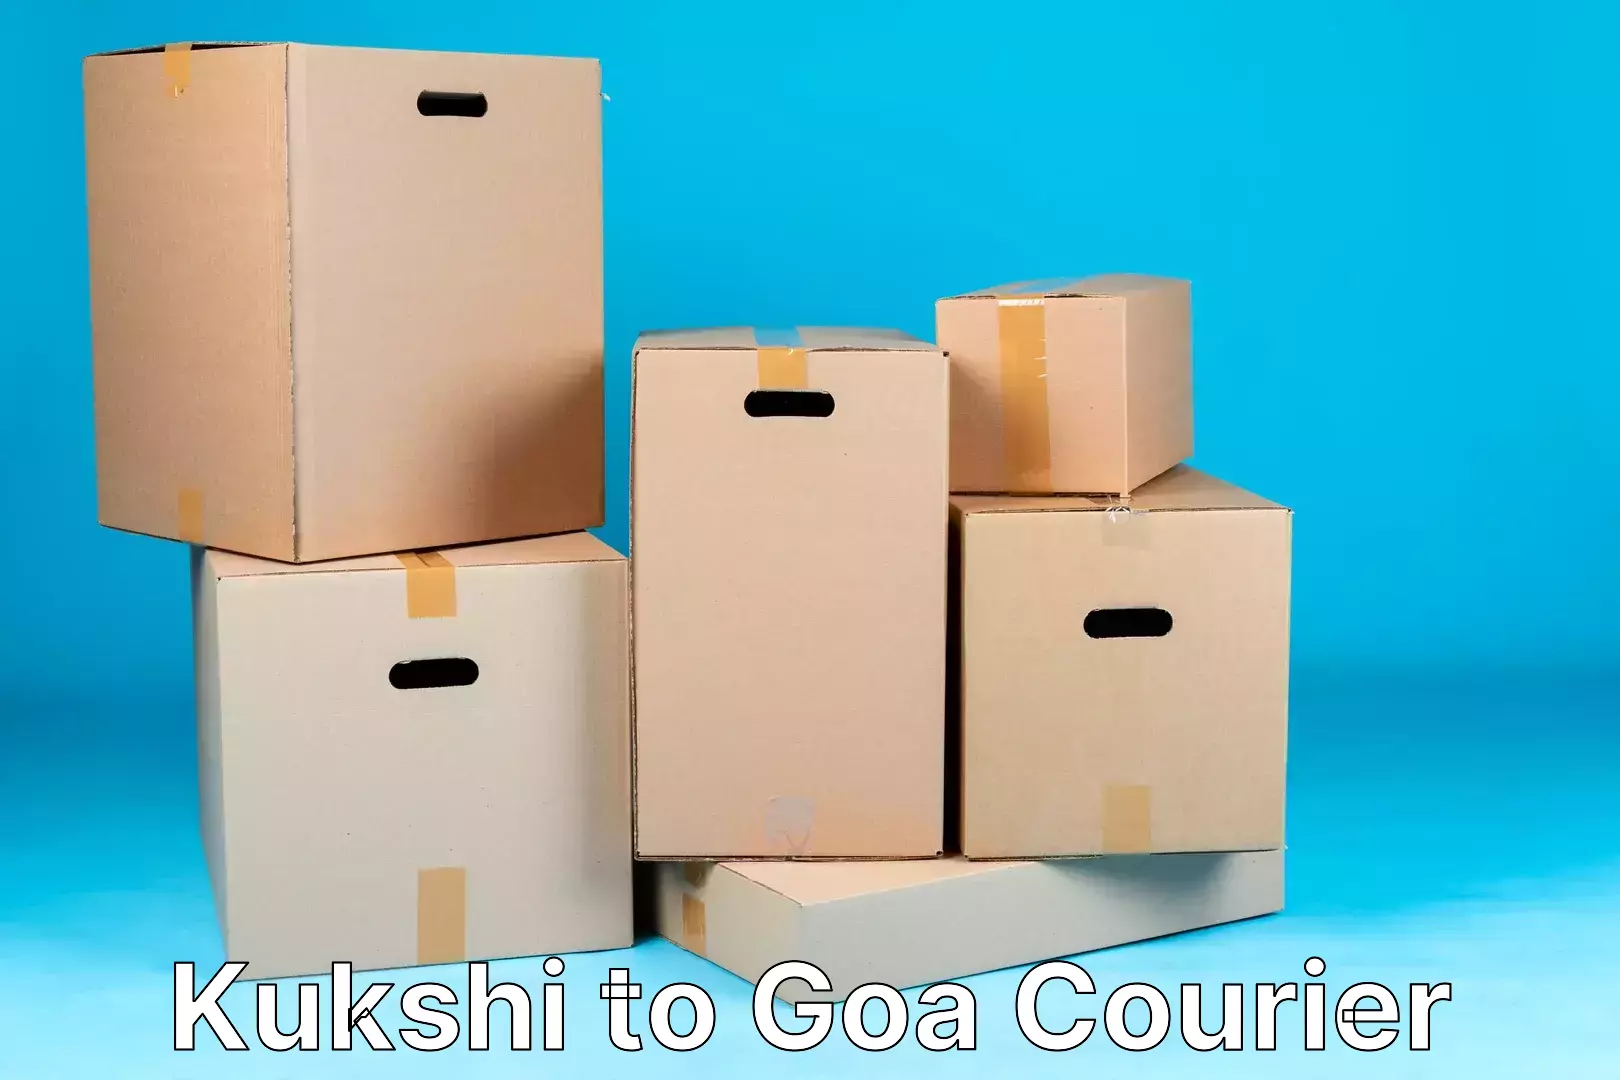 Courier service comparison Kukshi to Goa